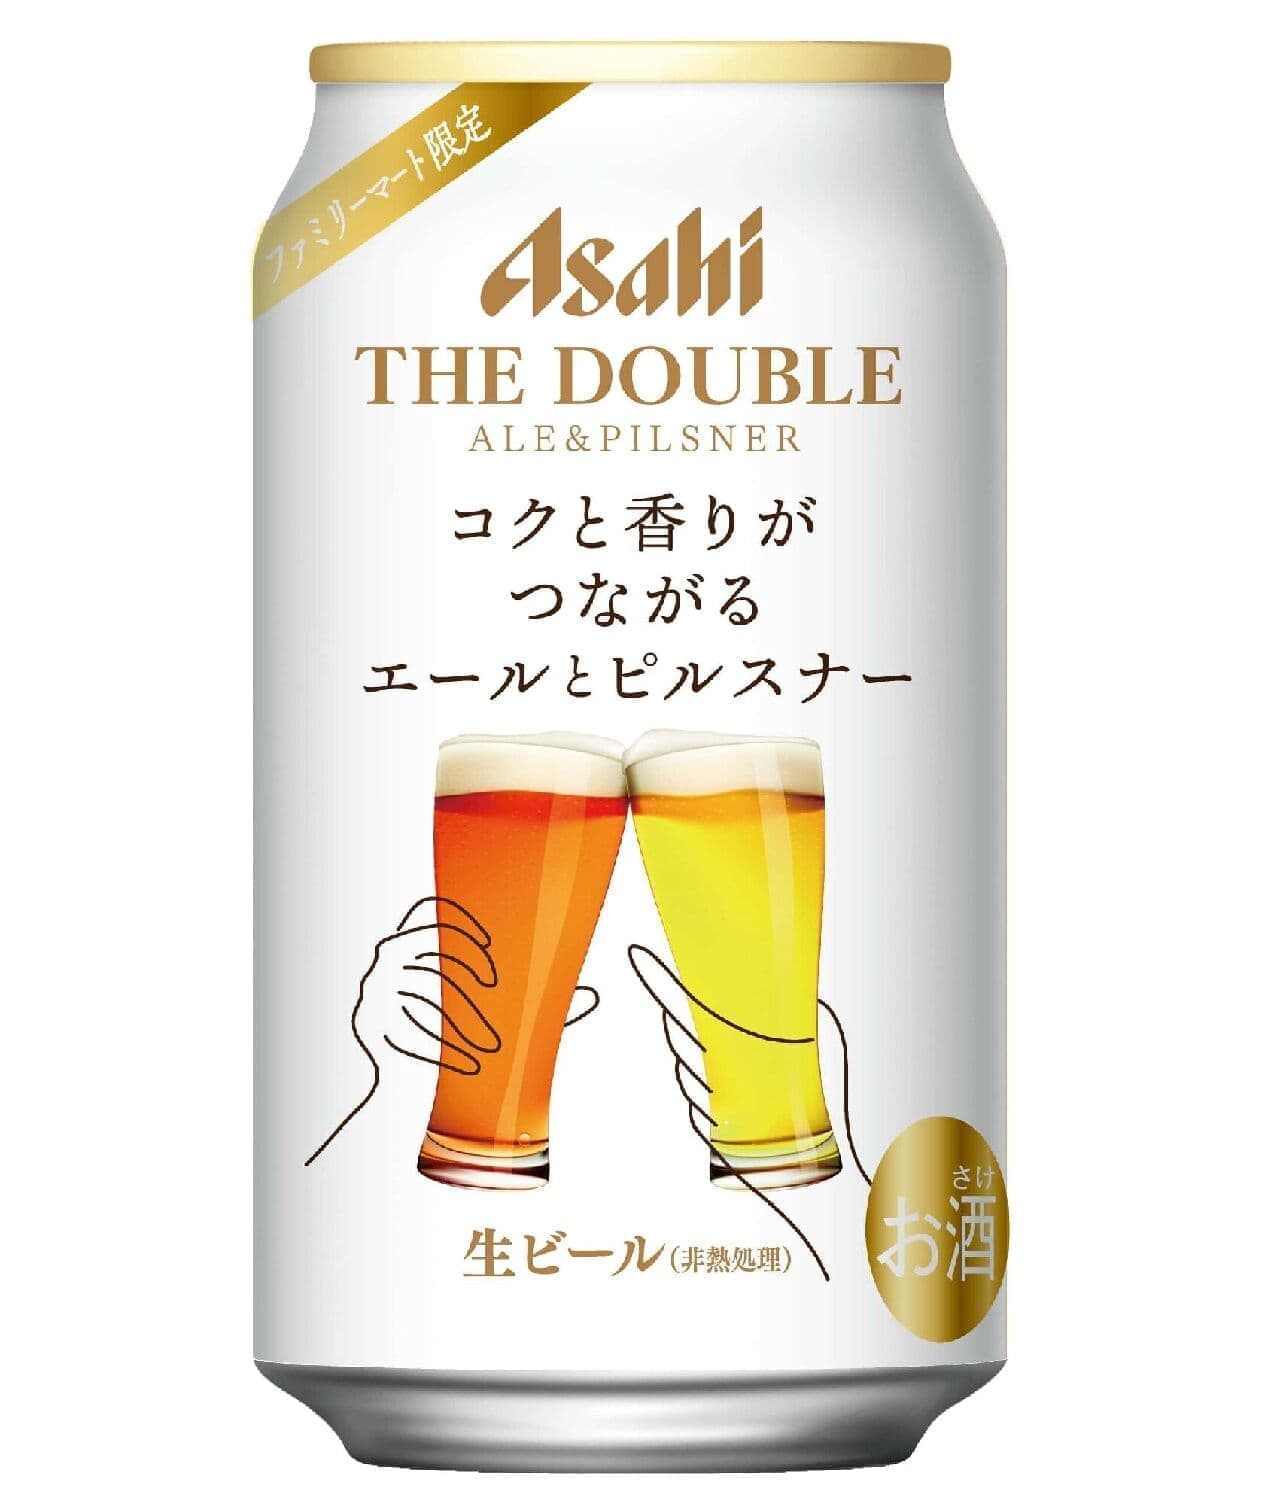 FamilyMart "Asahi The Double